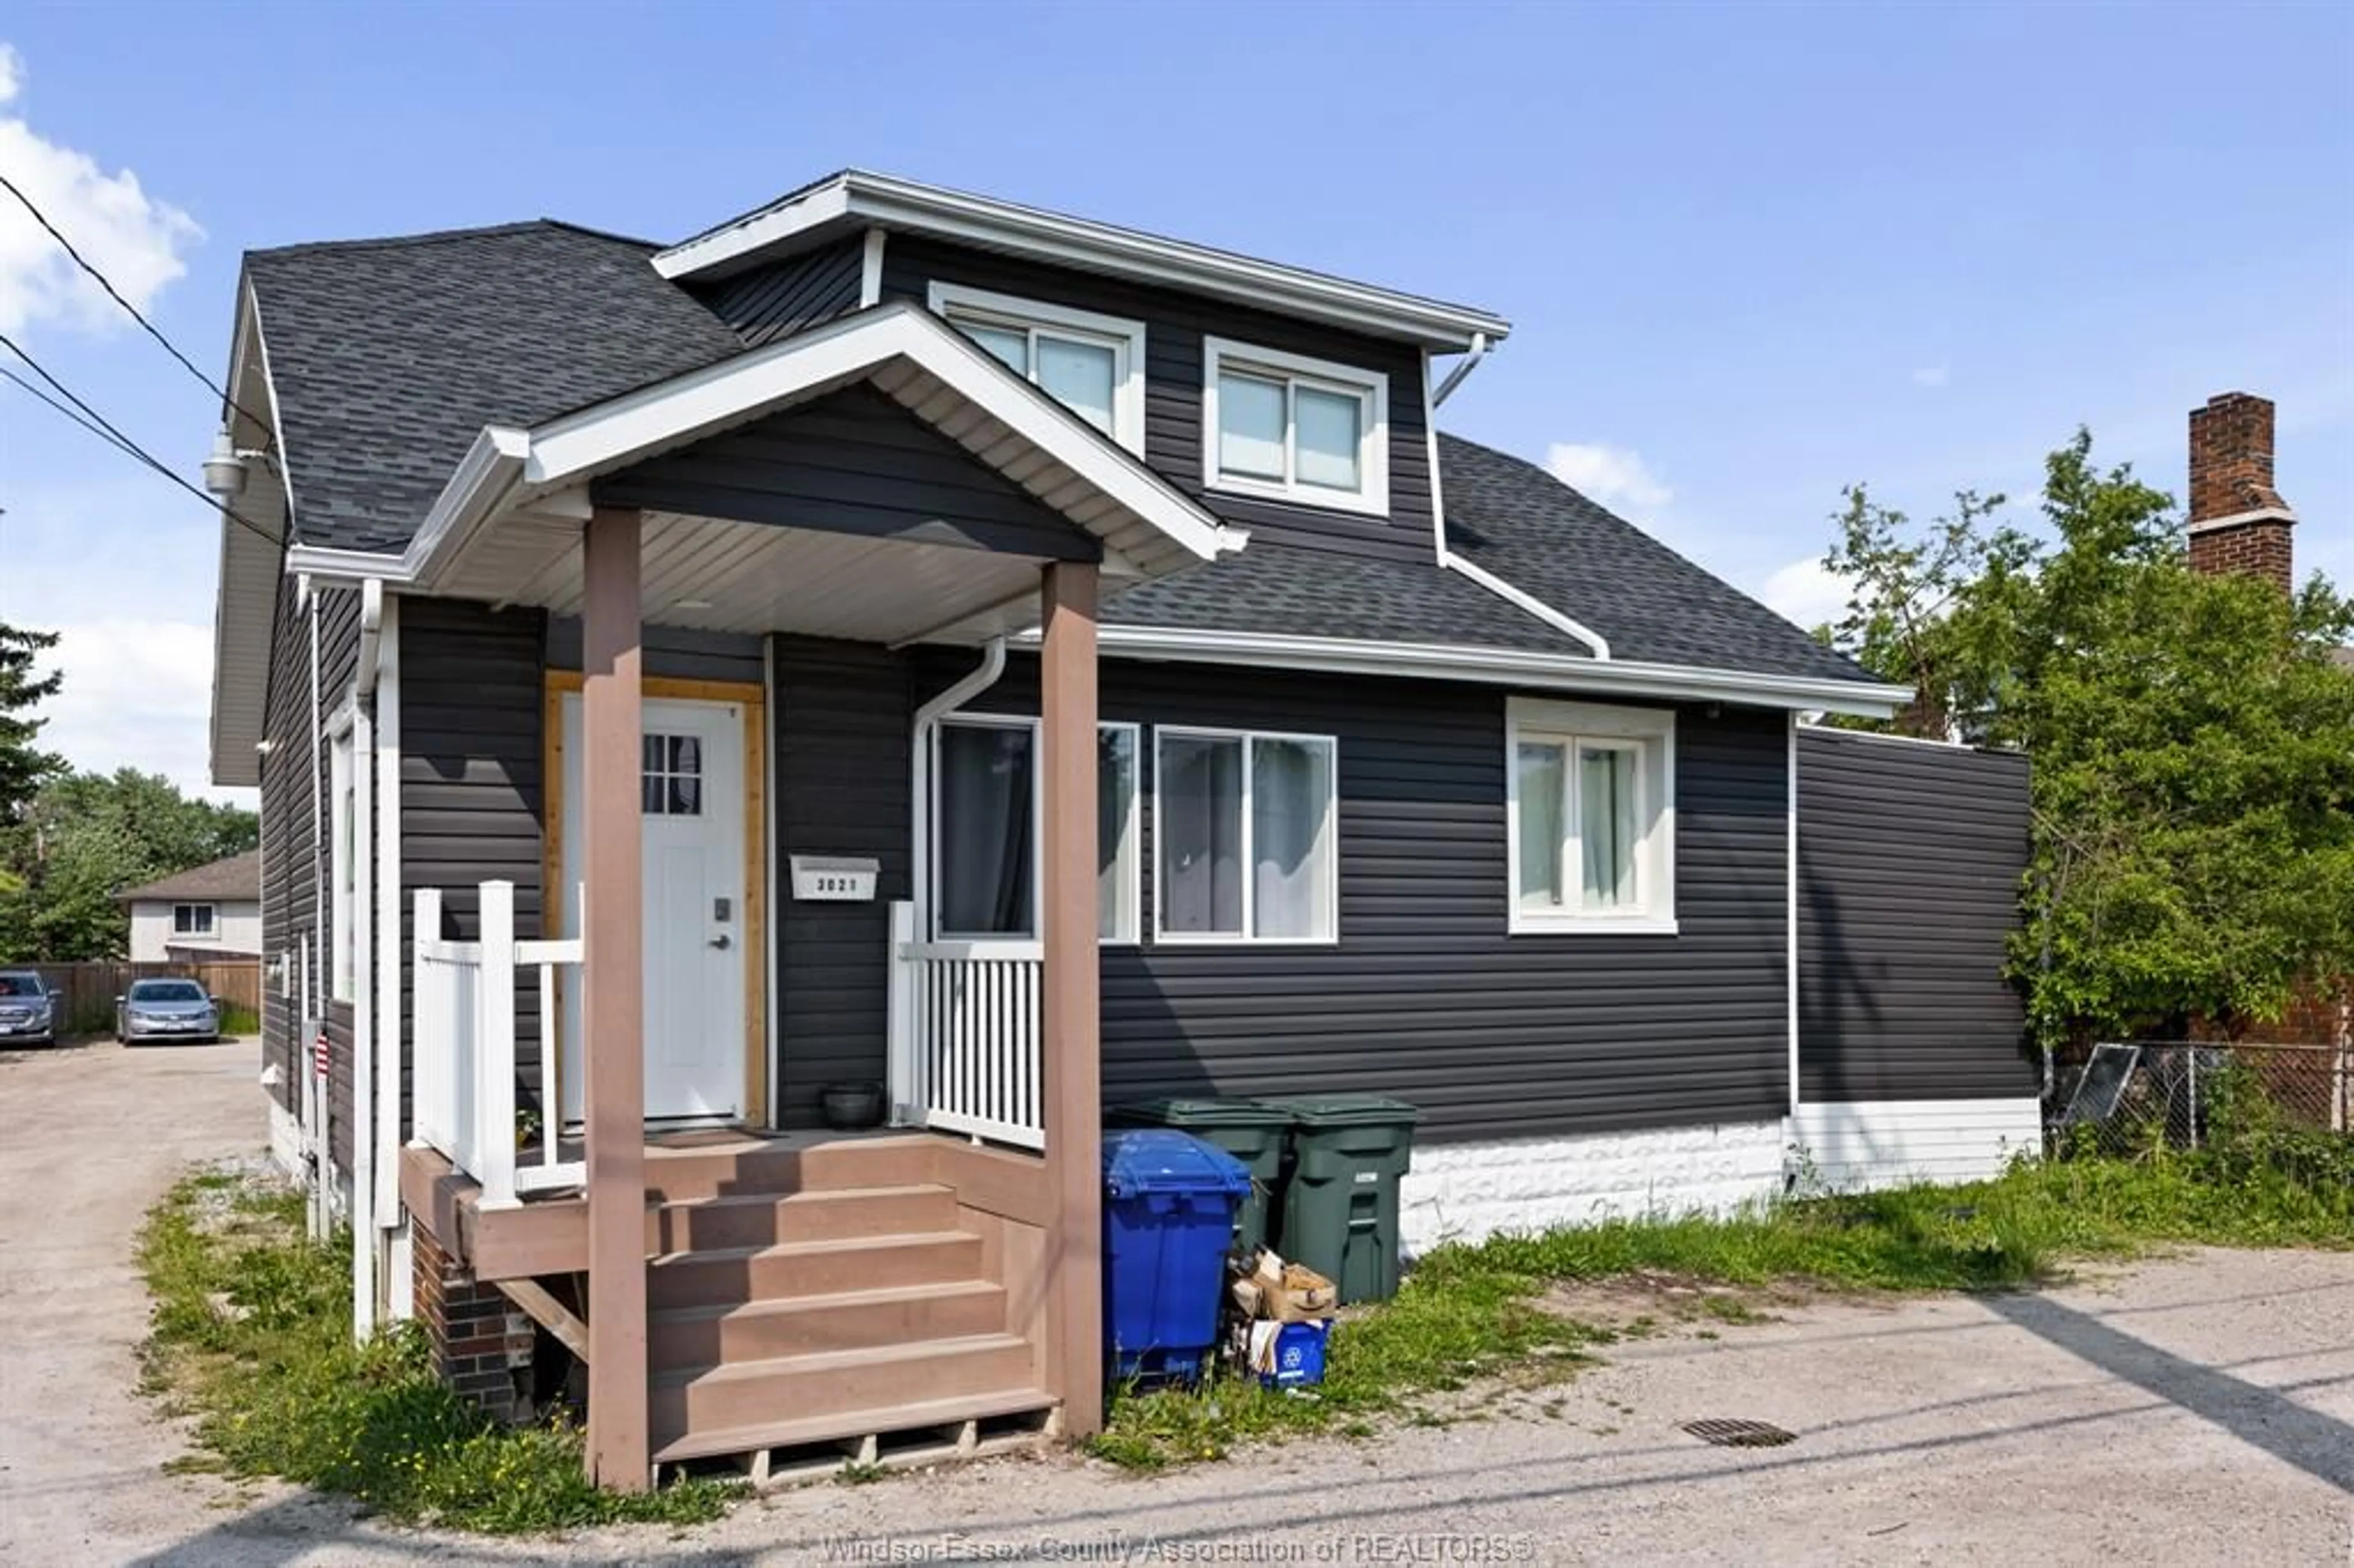 Frontside or backside of a home for 3021 WALKER Rd, Windsor Ontario N8W 3R4